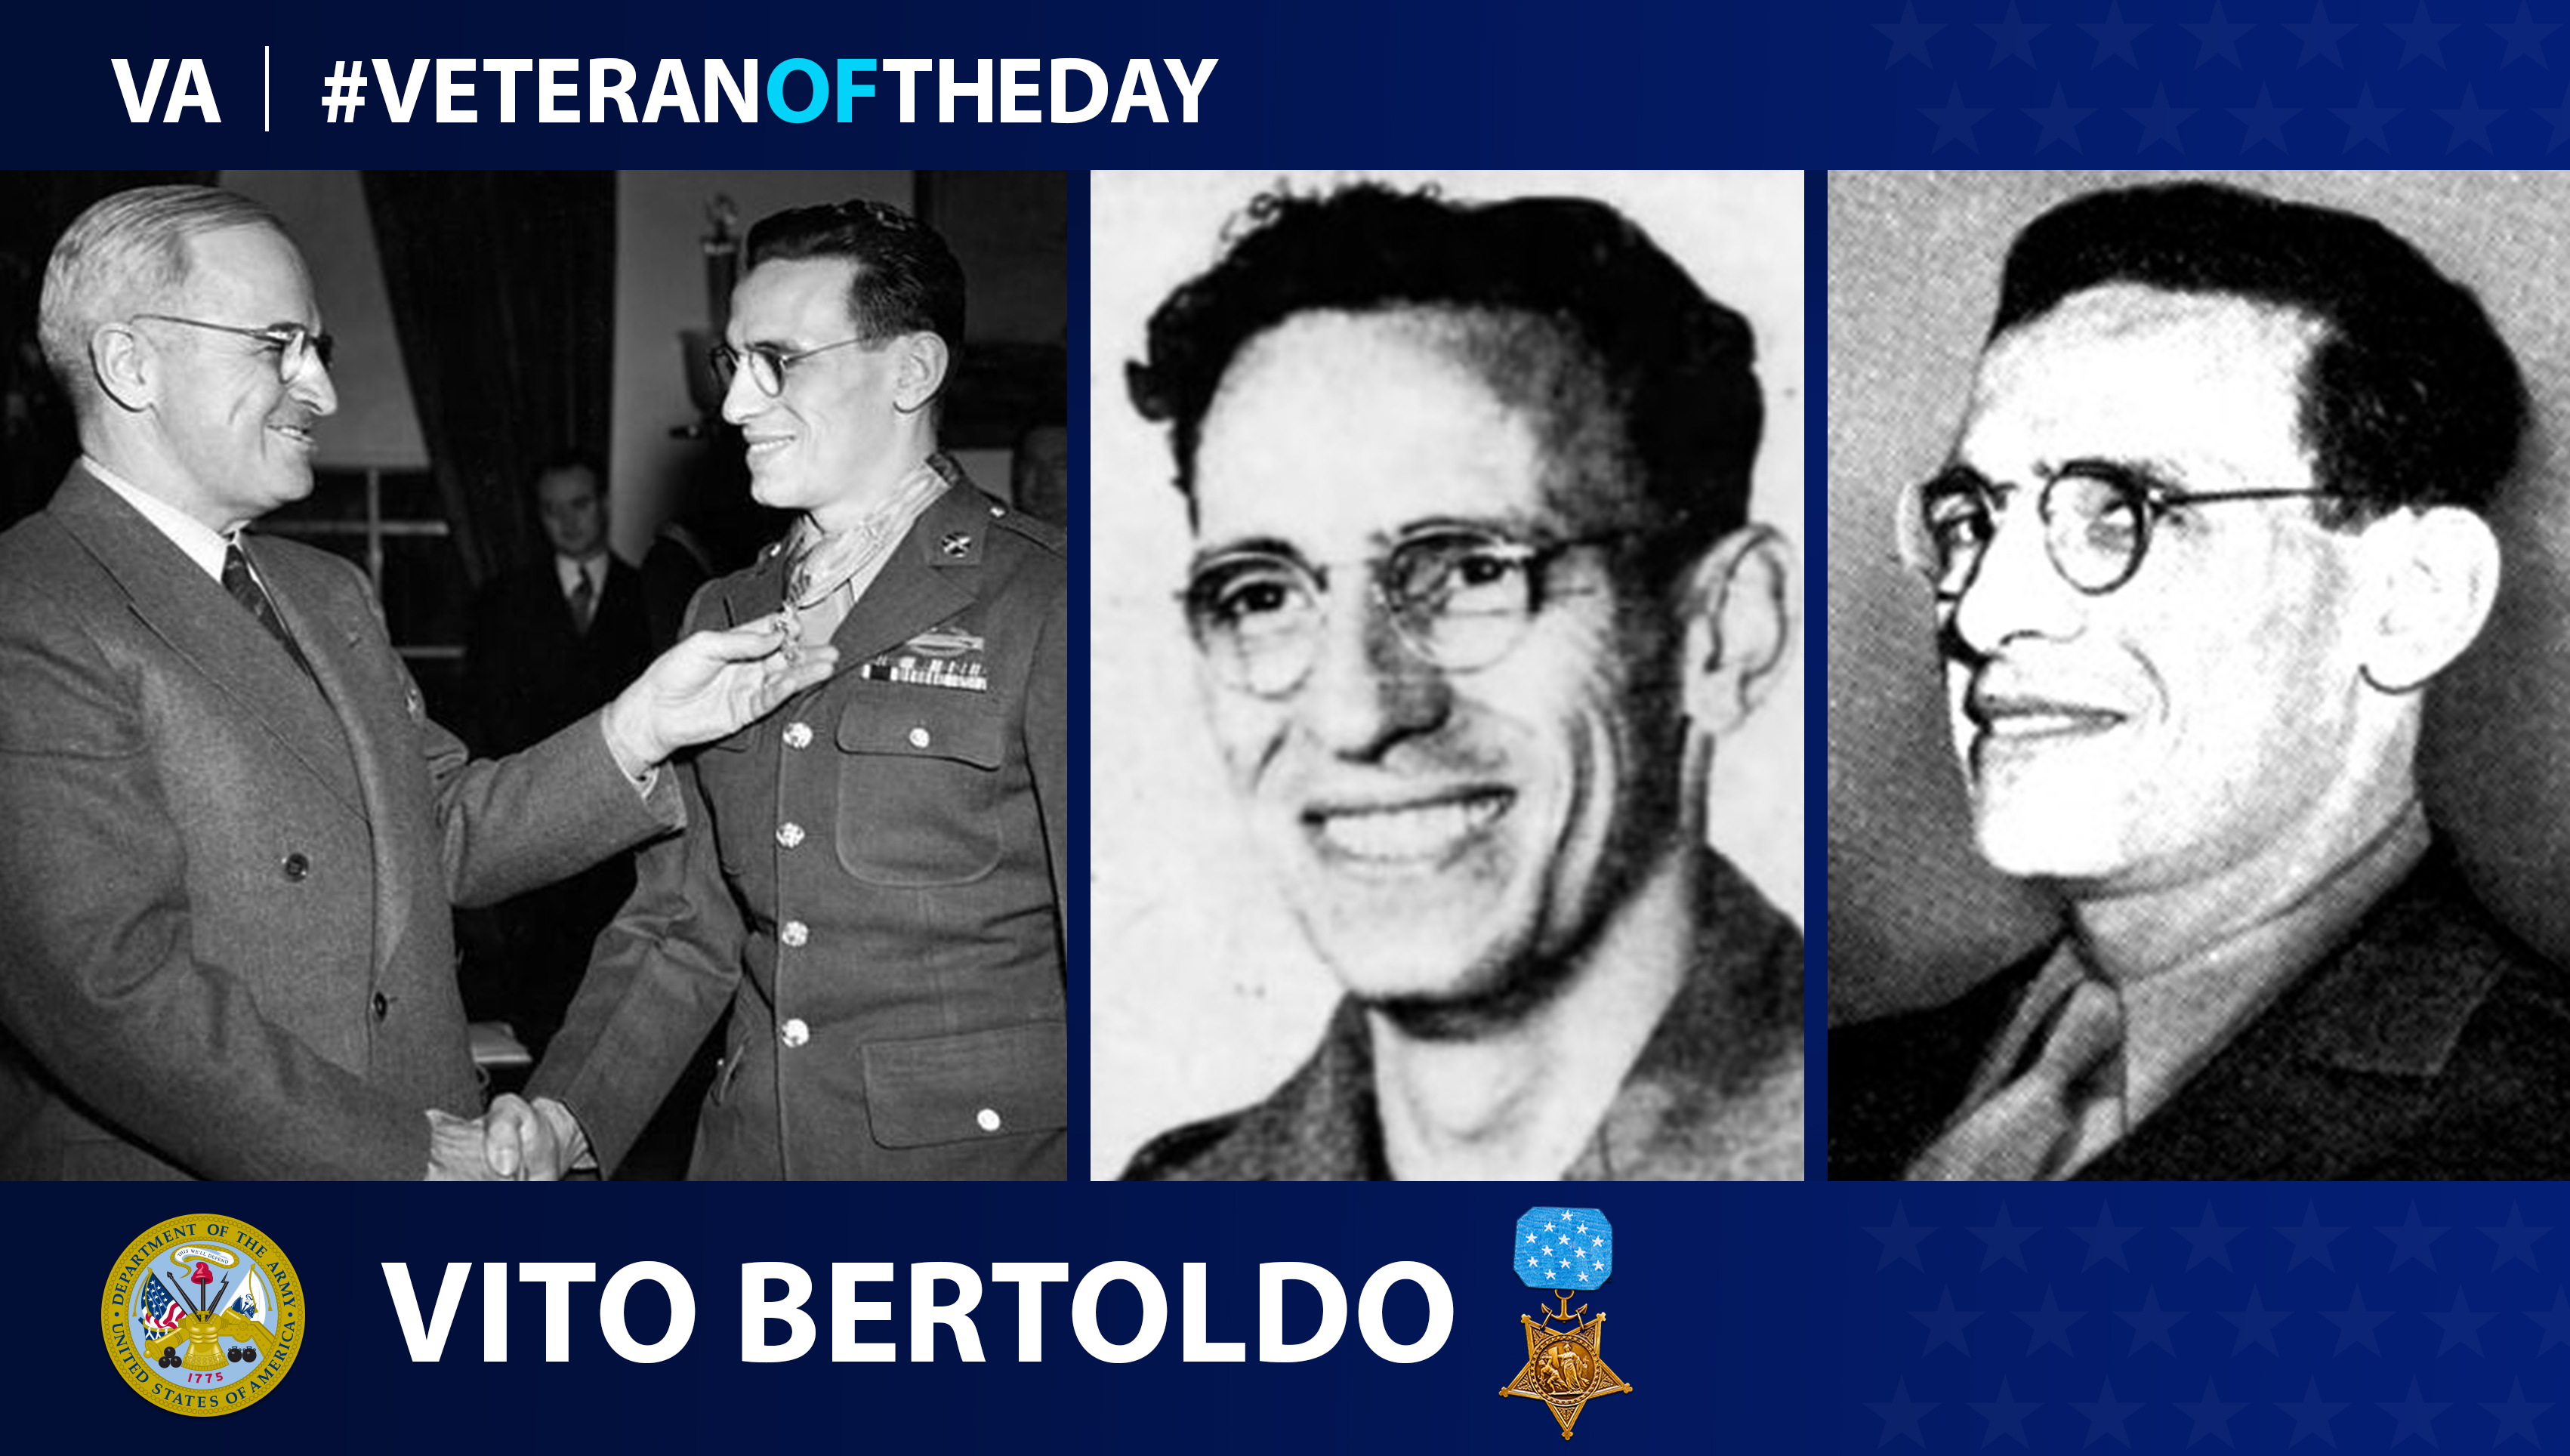 Army Veteran Vito Bertoldo is today's Veteran of the day.